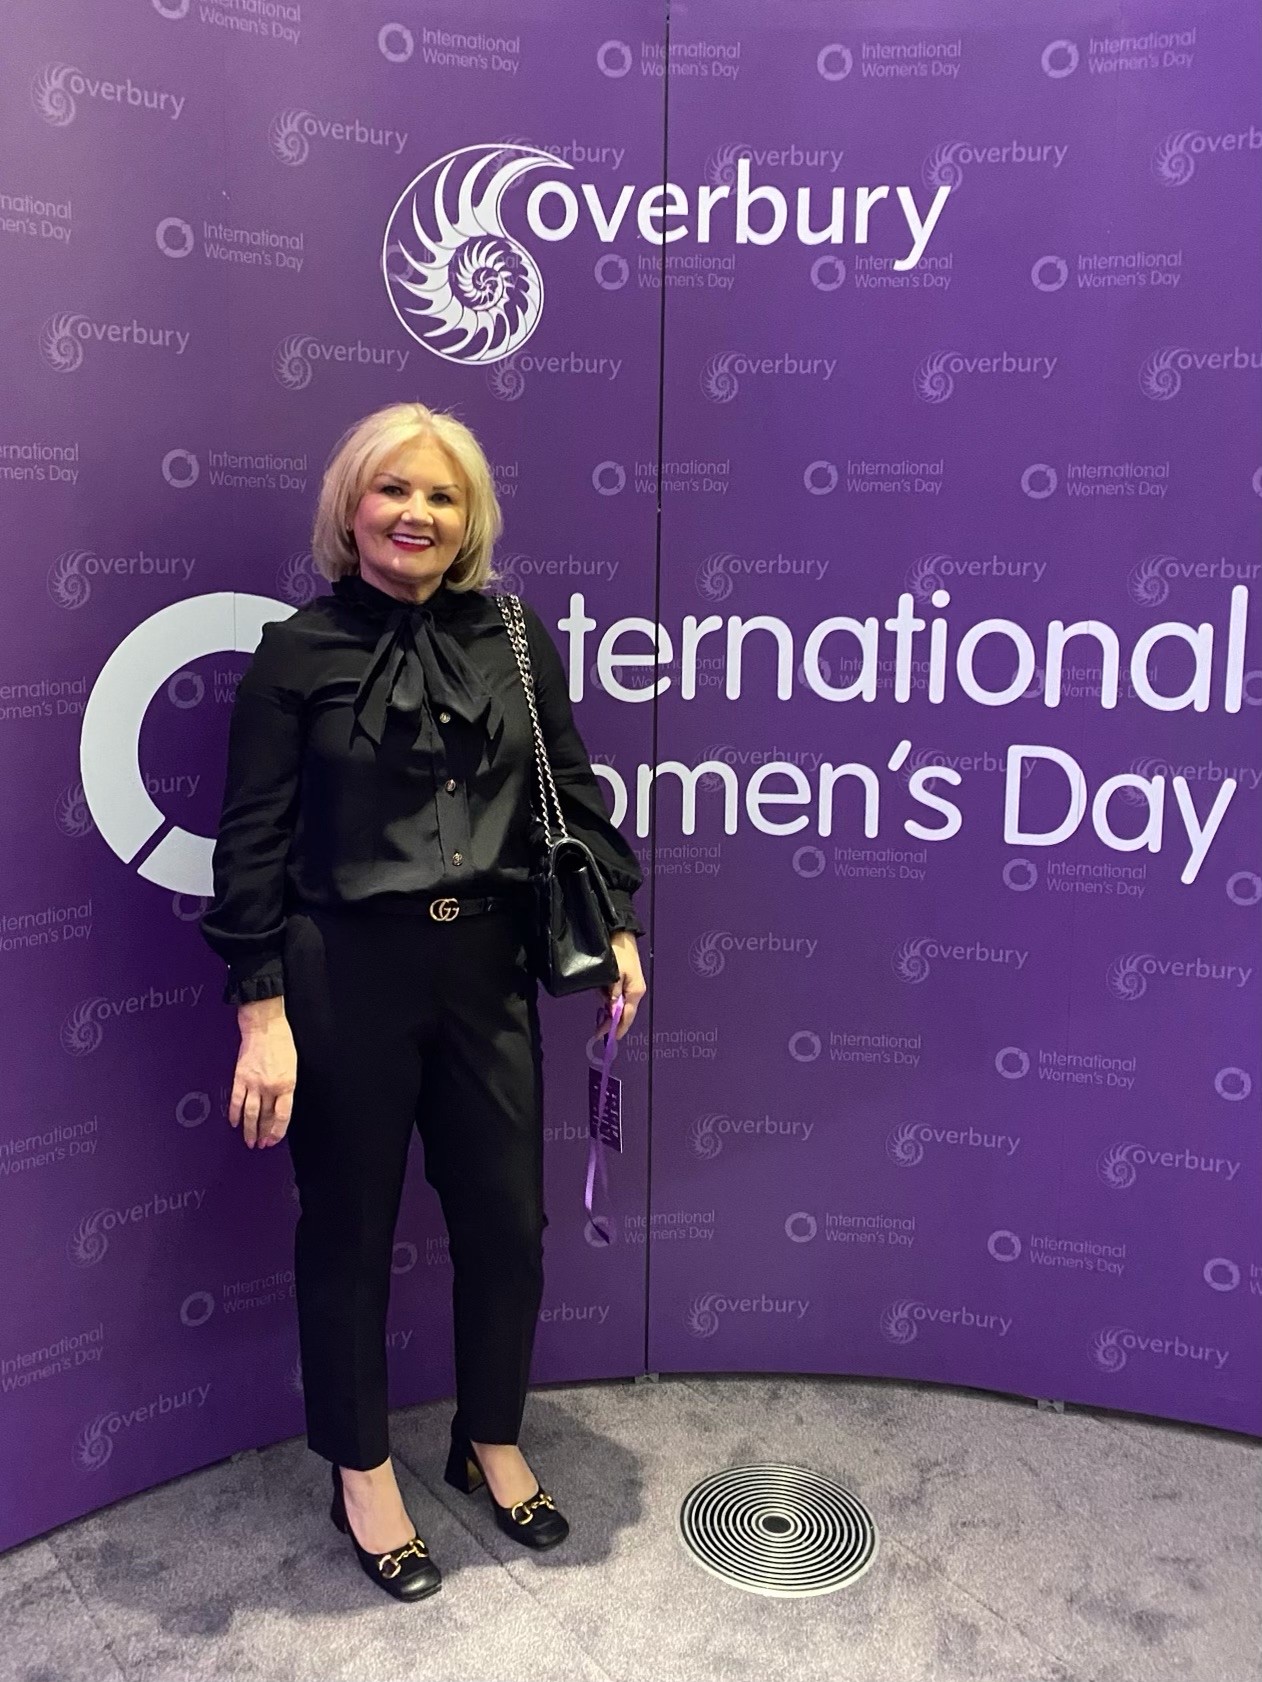 Sponsoring Overbury’s International Women’s Day Event!